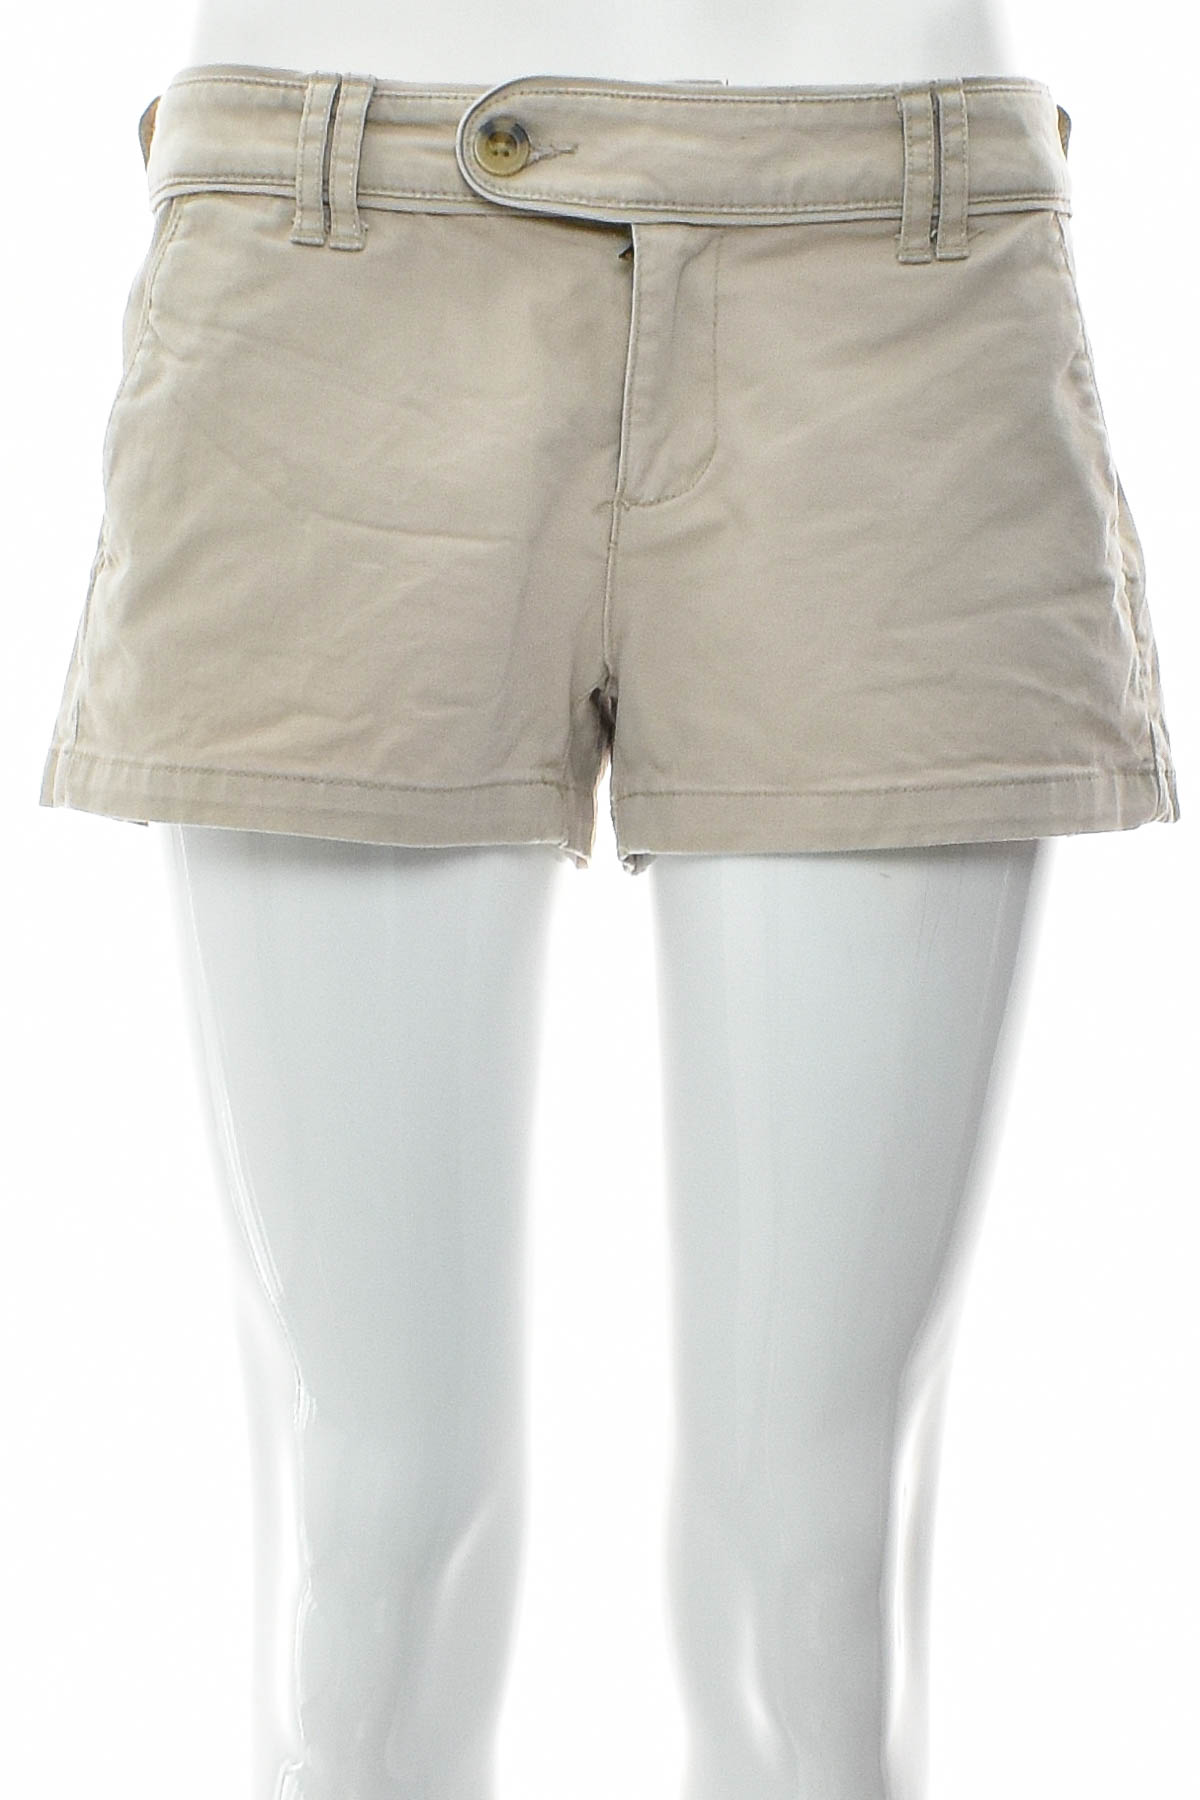 Female shorts - ARIZONA JEAN CO - 0